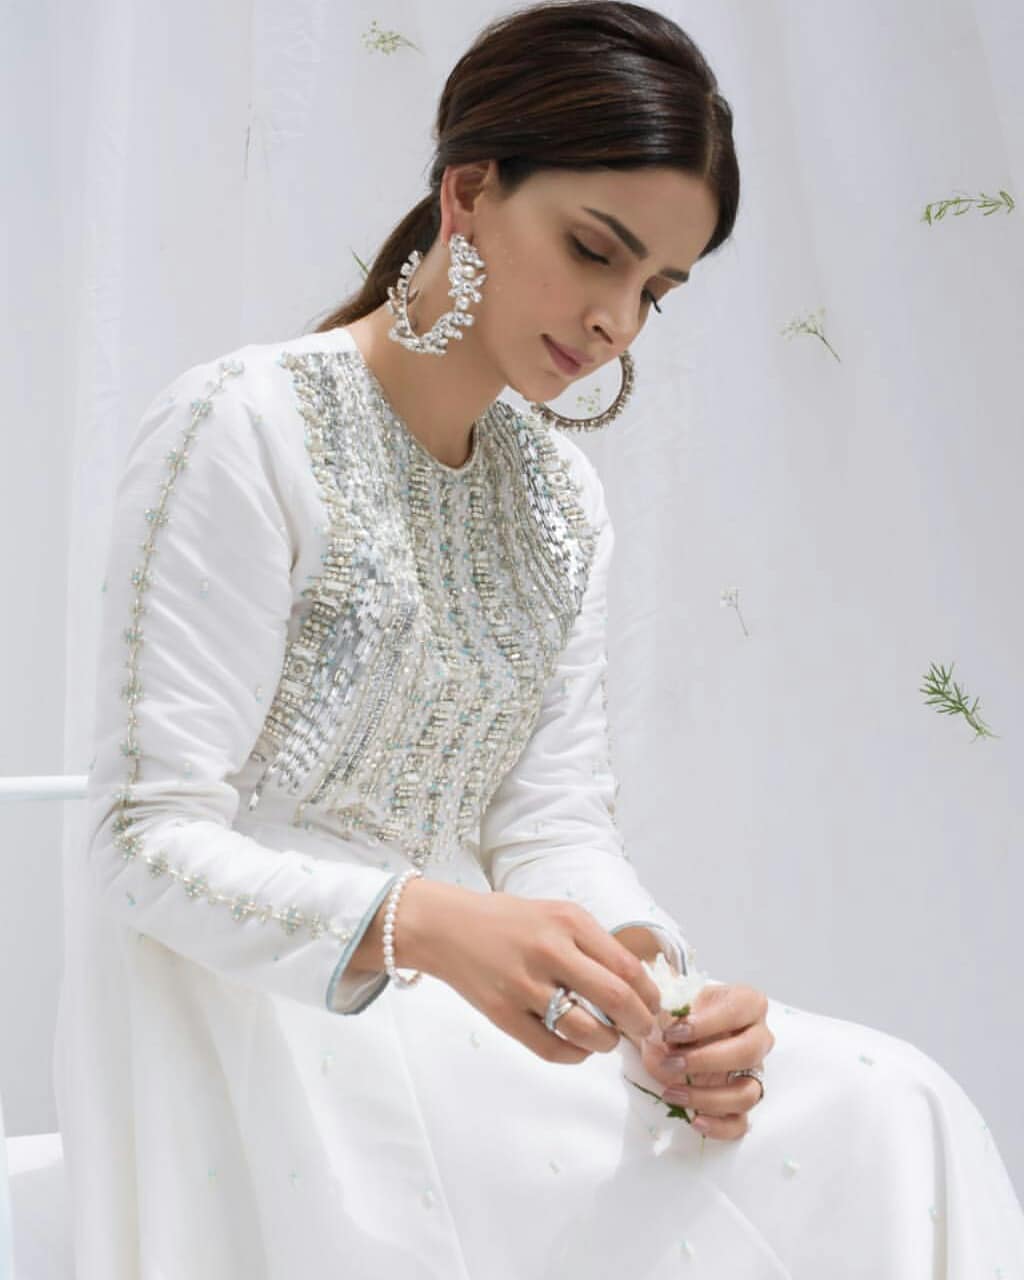 Gorgeous Actress Saba Qamar Sizzles in this Beautiful White Dress